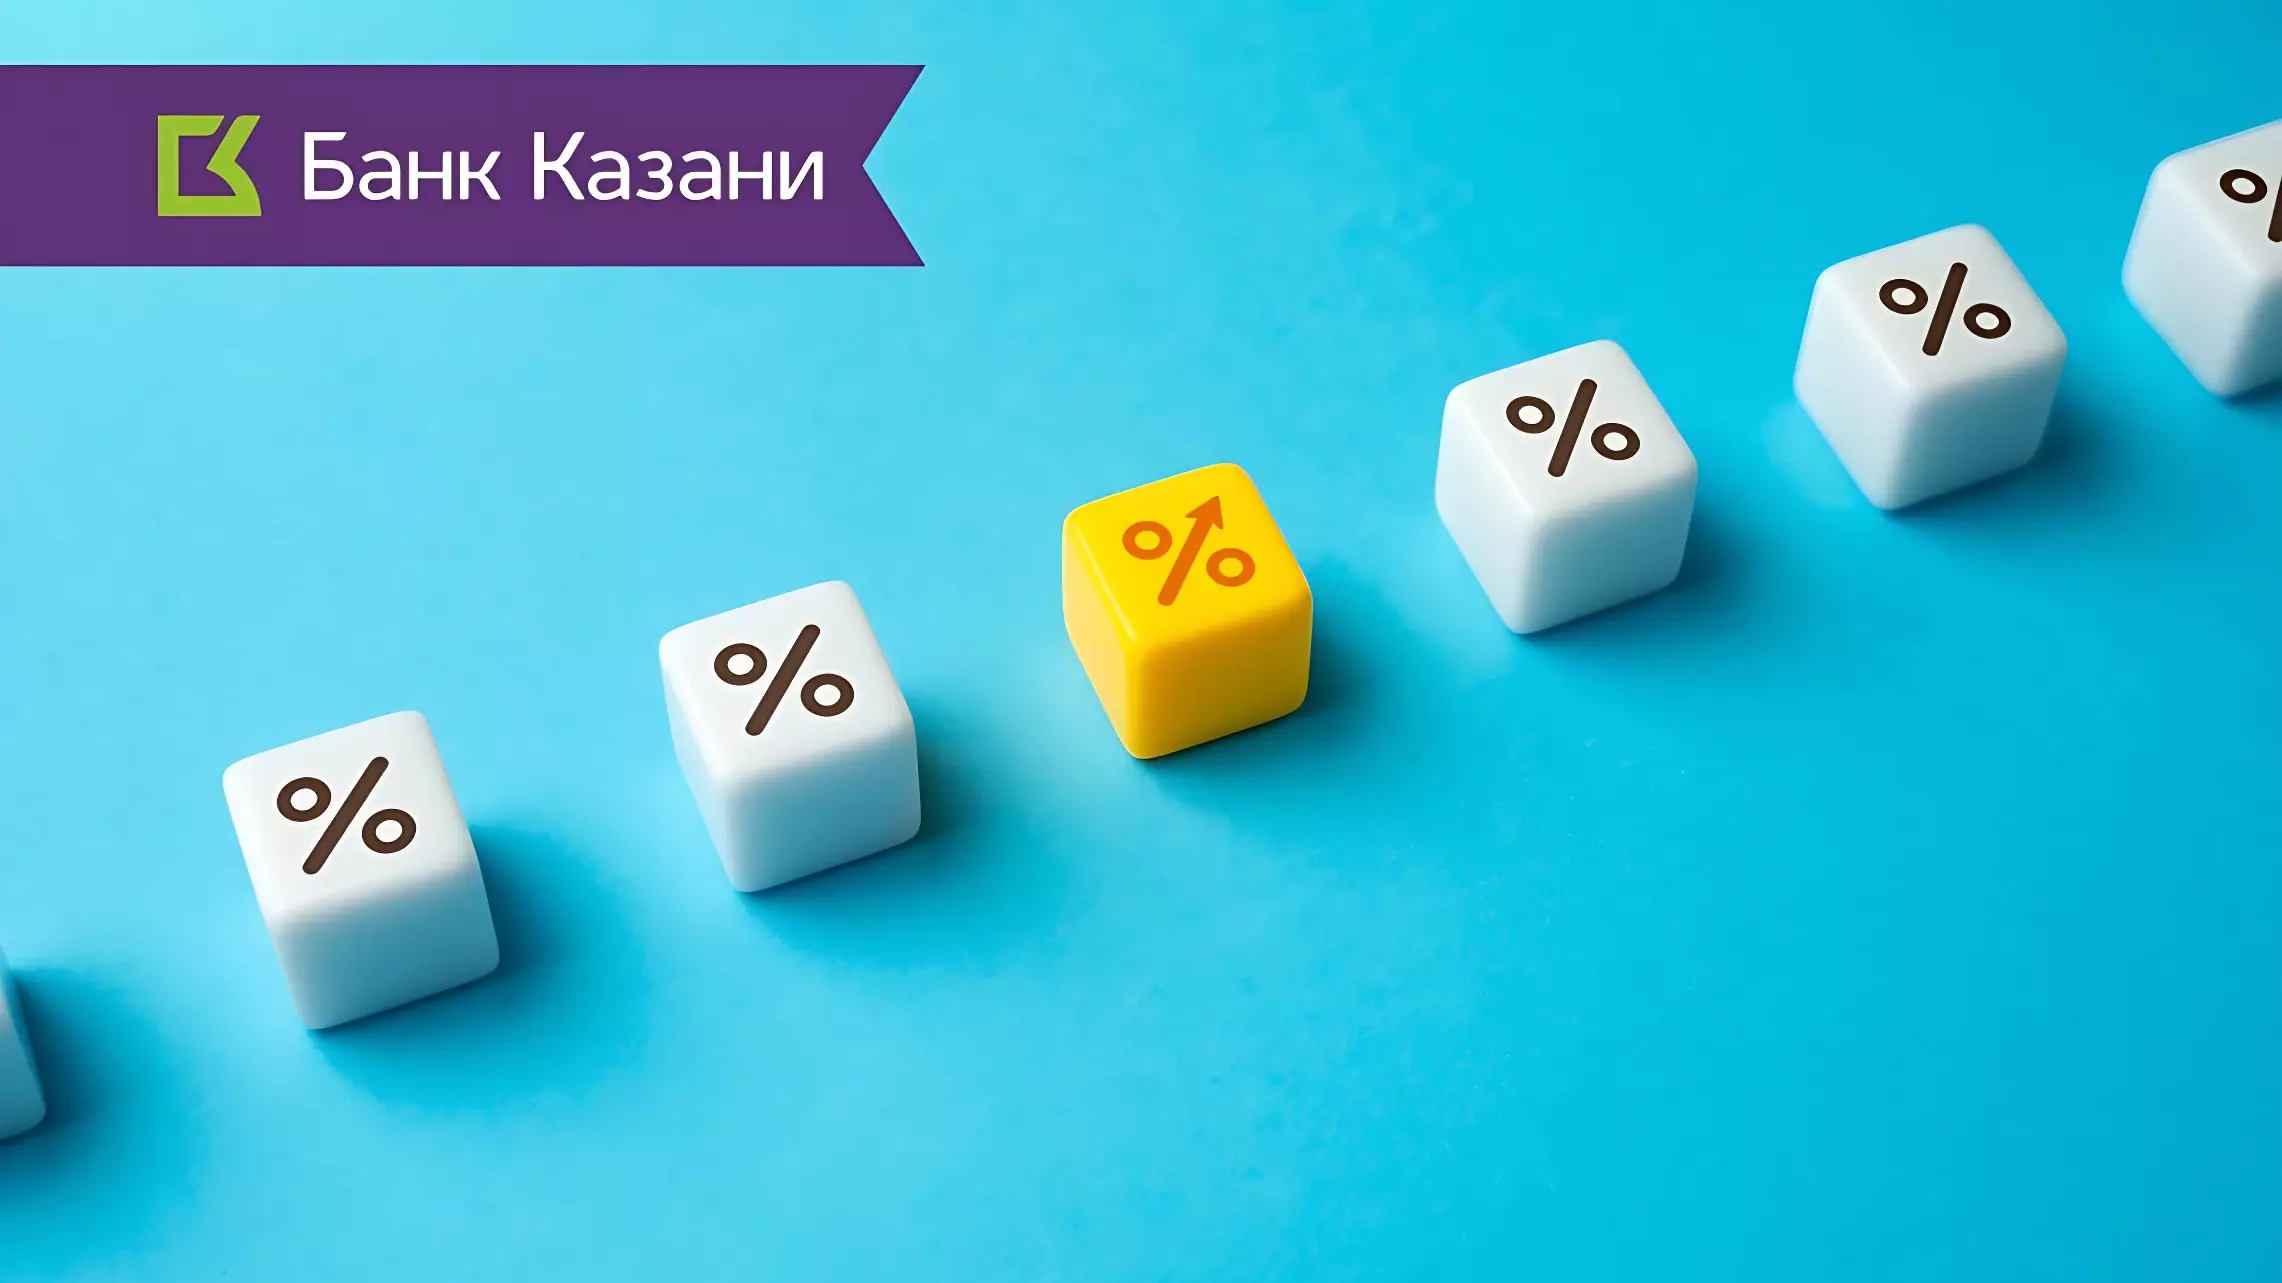 Банк Казани поднял ставку по вкладу до 14,5%*